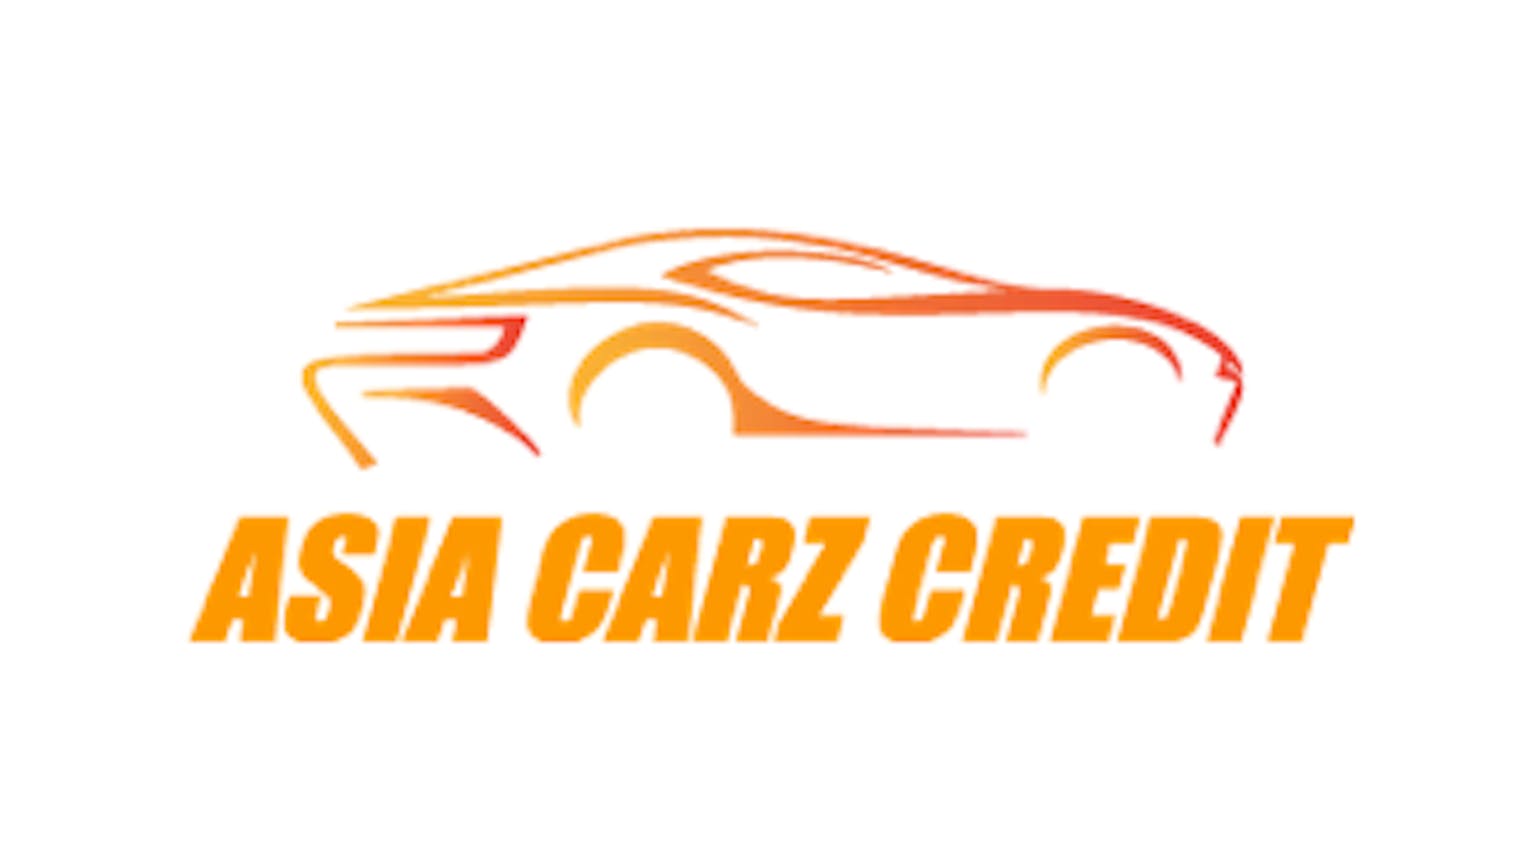 Asia Carz Credit Car Loan